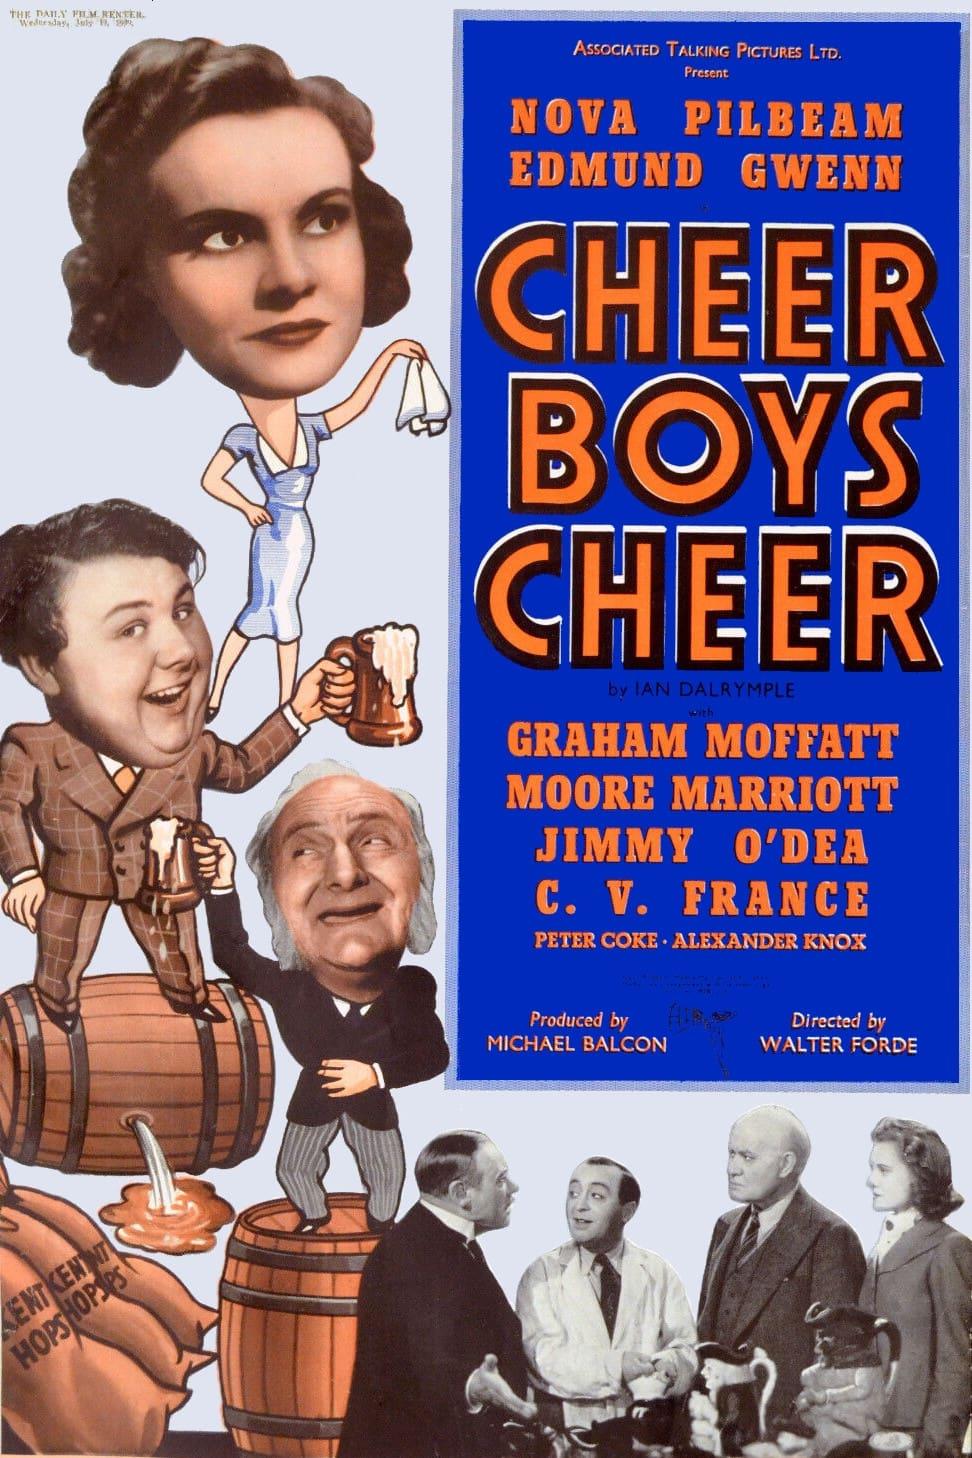 Cheer Boys Cheer poster